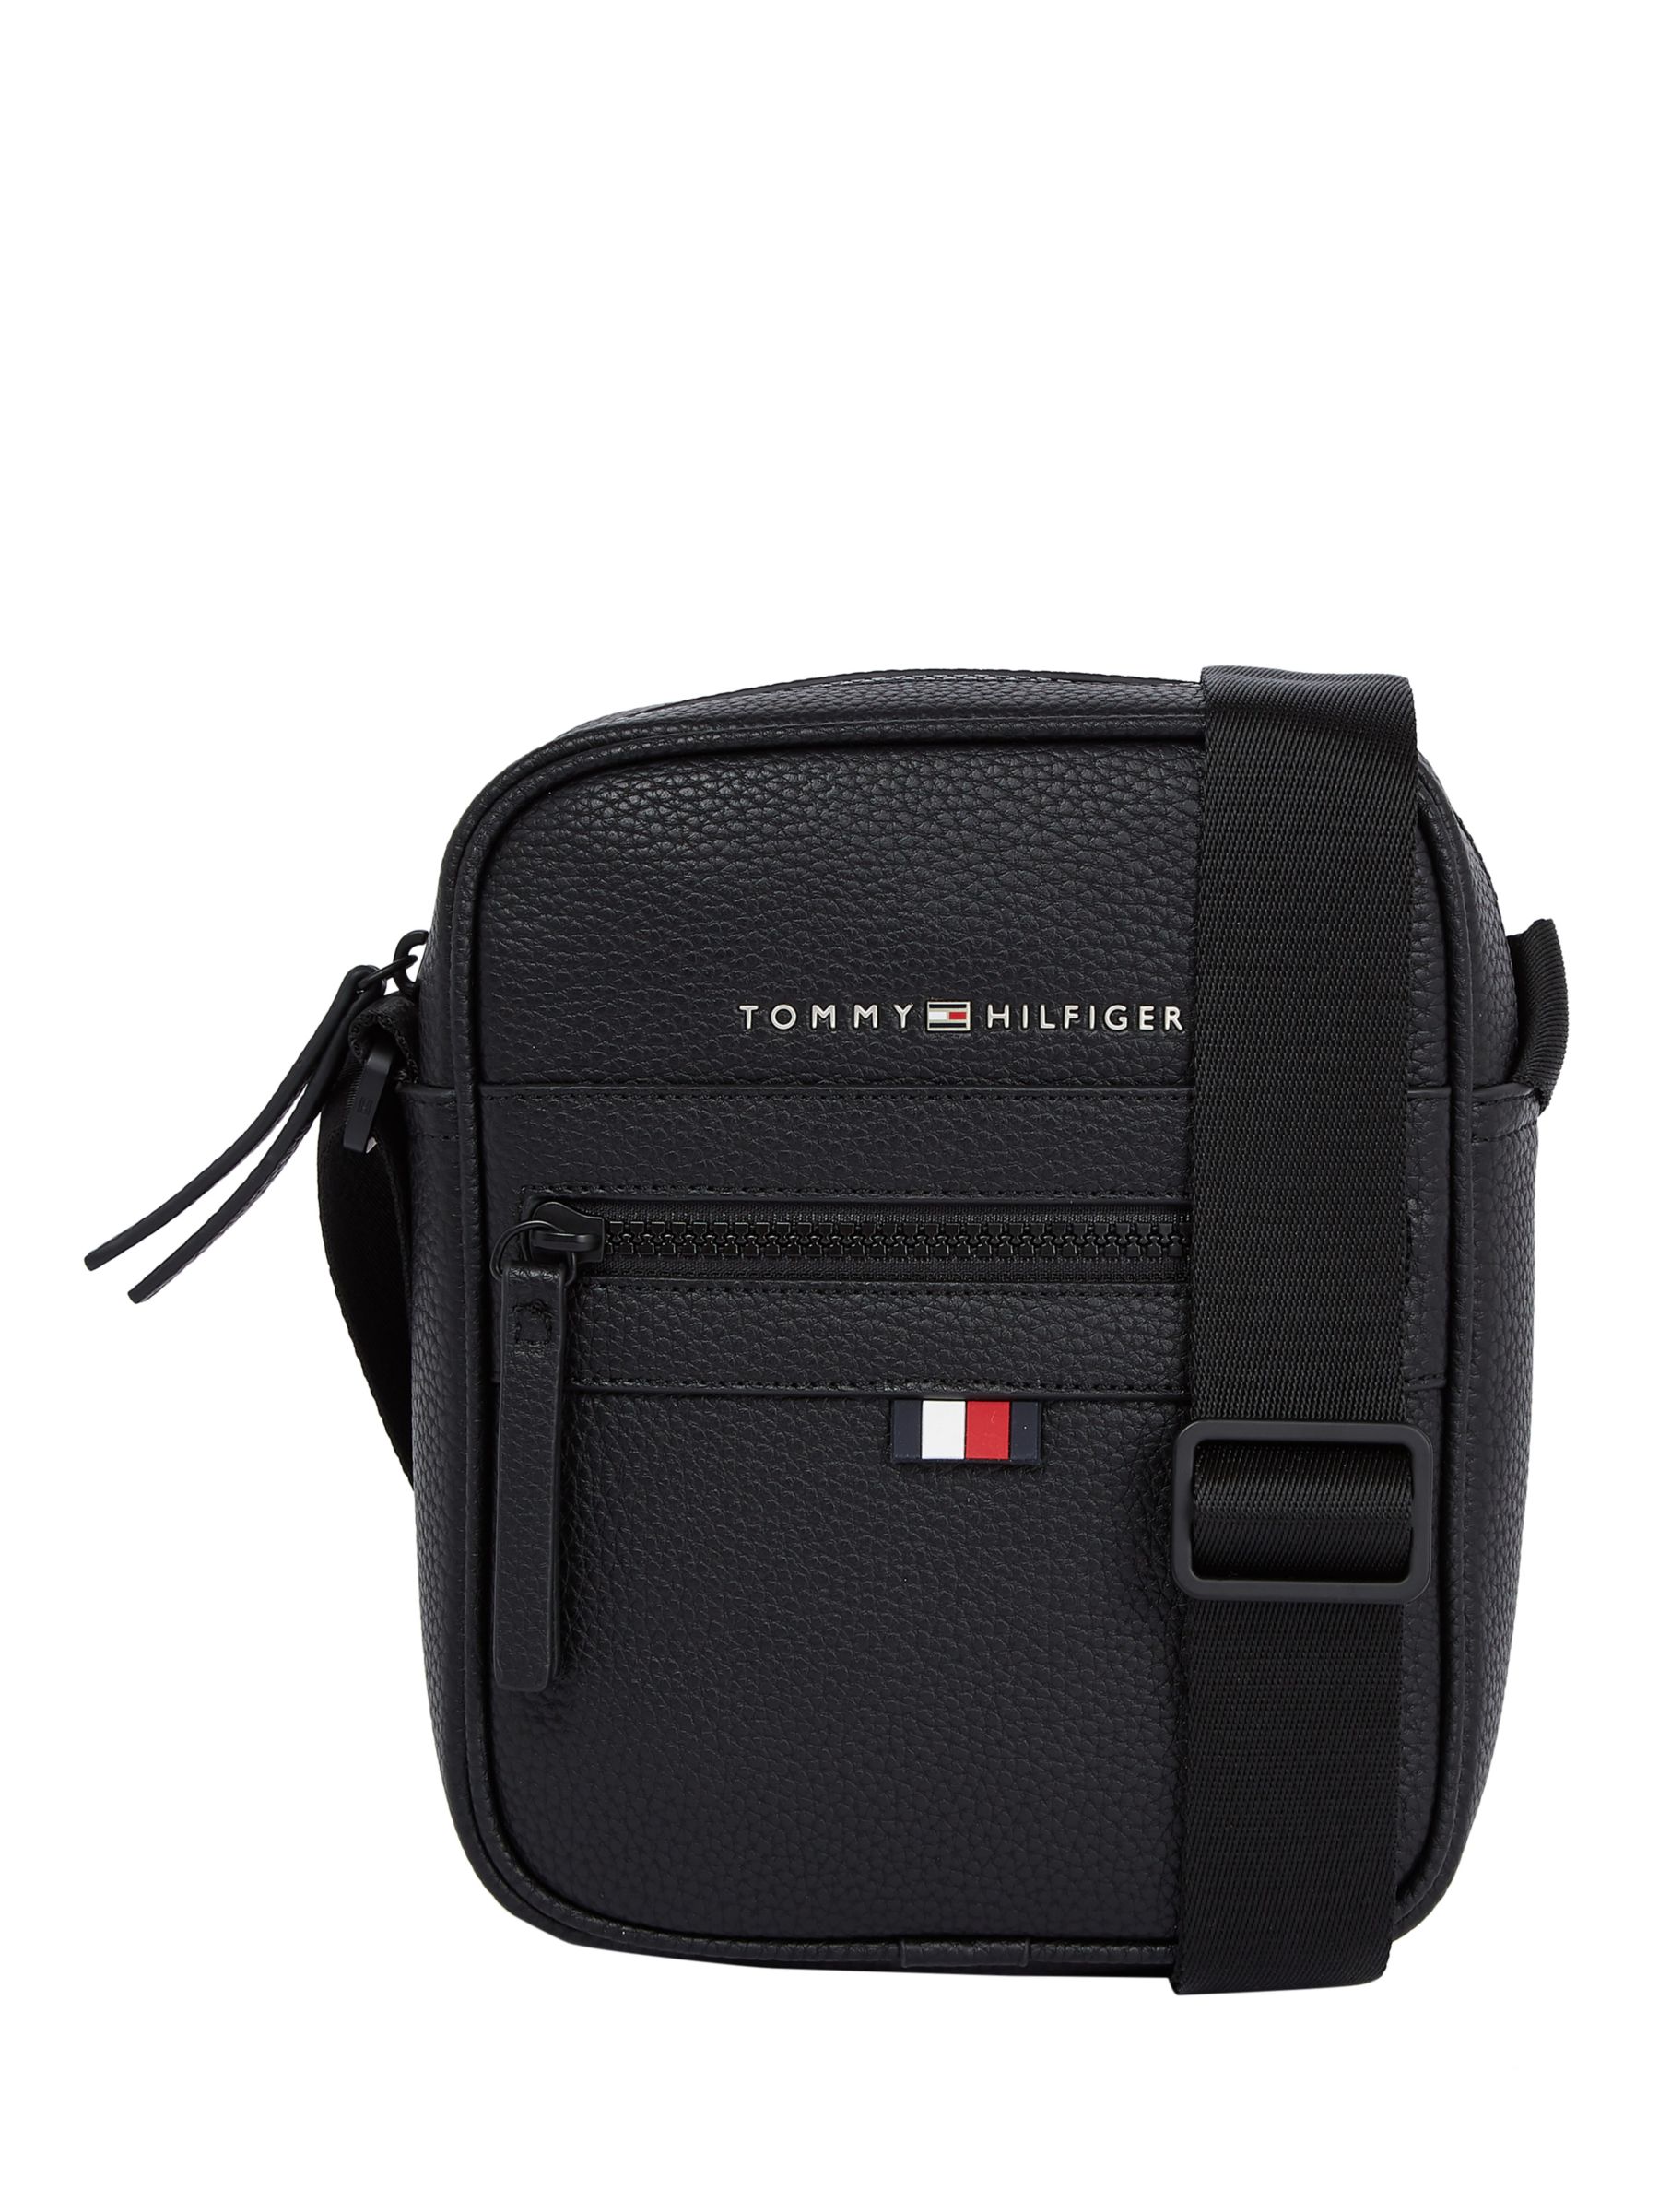 Tommy Hilfiger Essential Mini Reporter Bag, Black at John Lewis & Partners